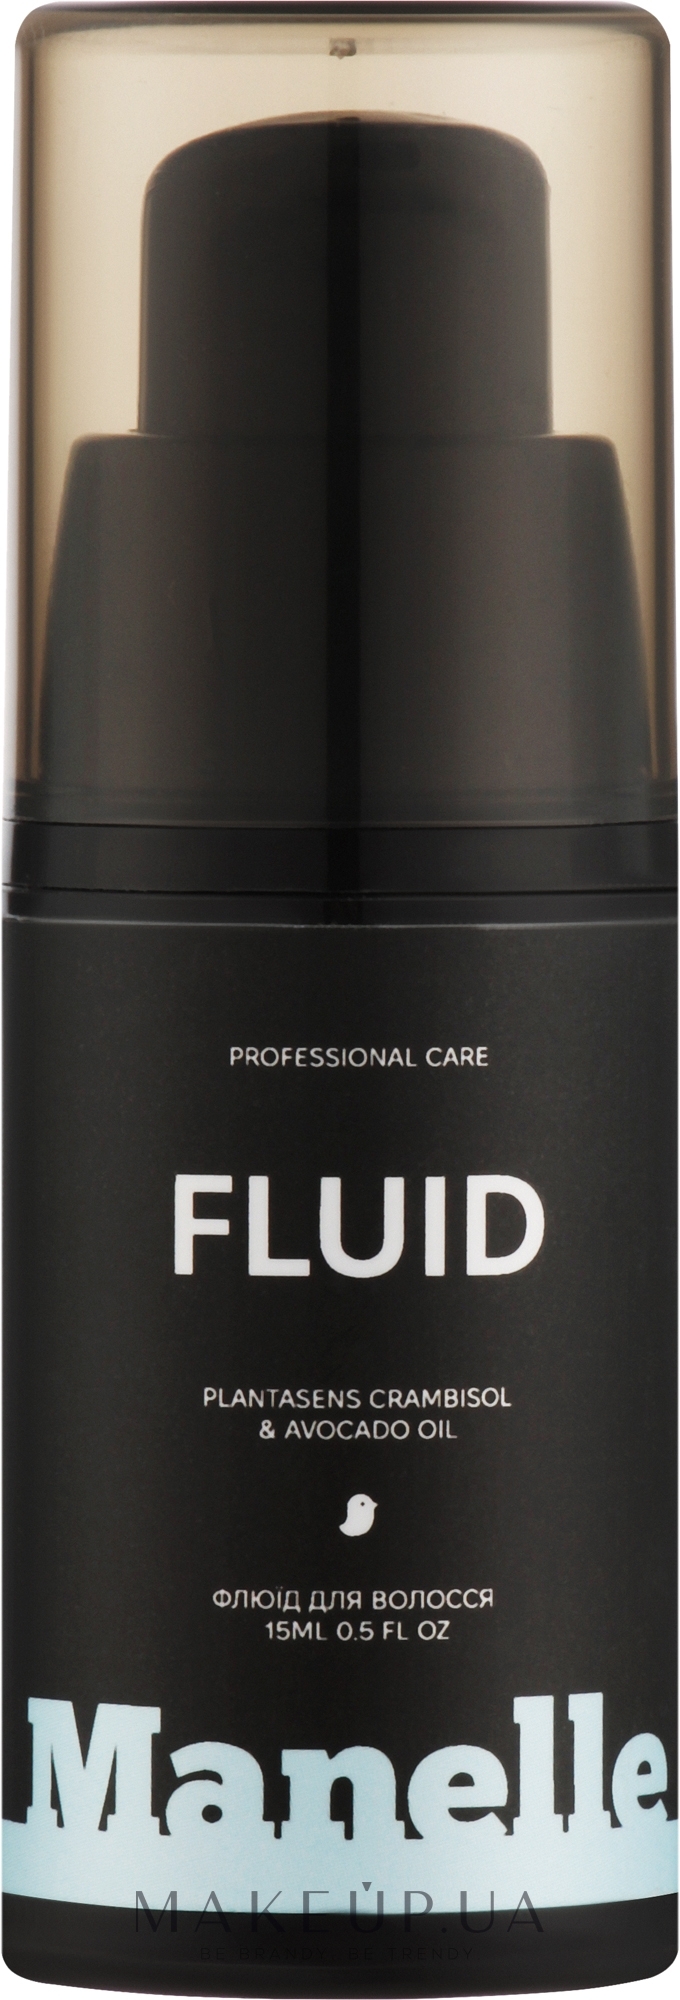 Флюїд для професійного догляду за білявим волоссям - Manelle Professional Care Plantasens Crambisol & Avocado Oil Fluid — фото 15ml